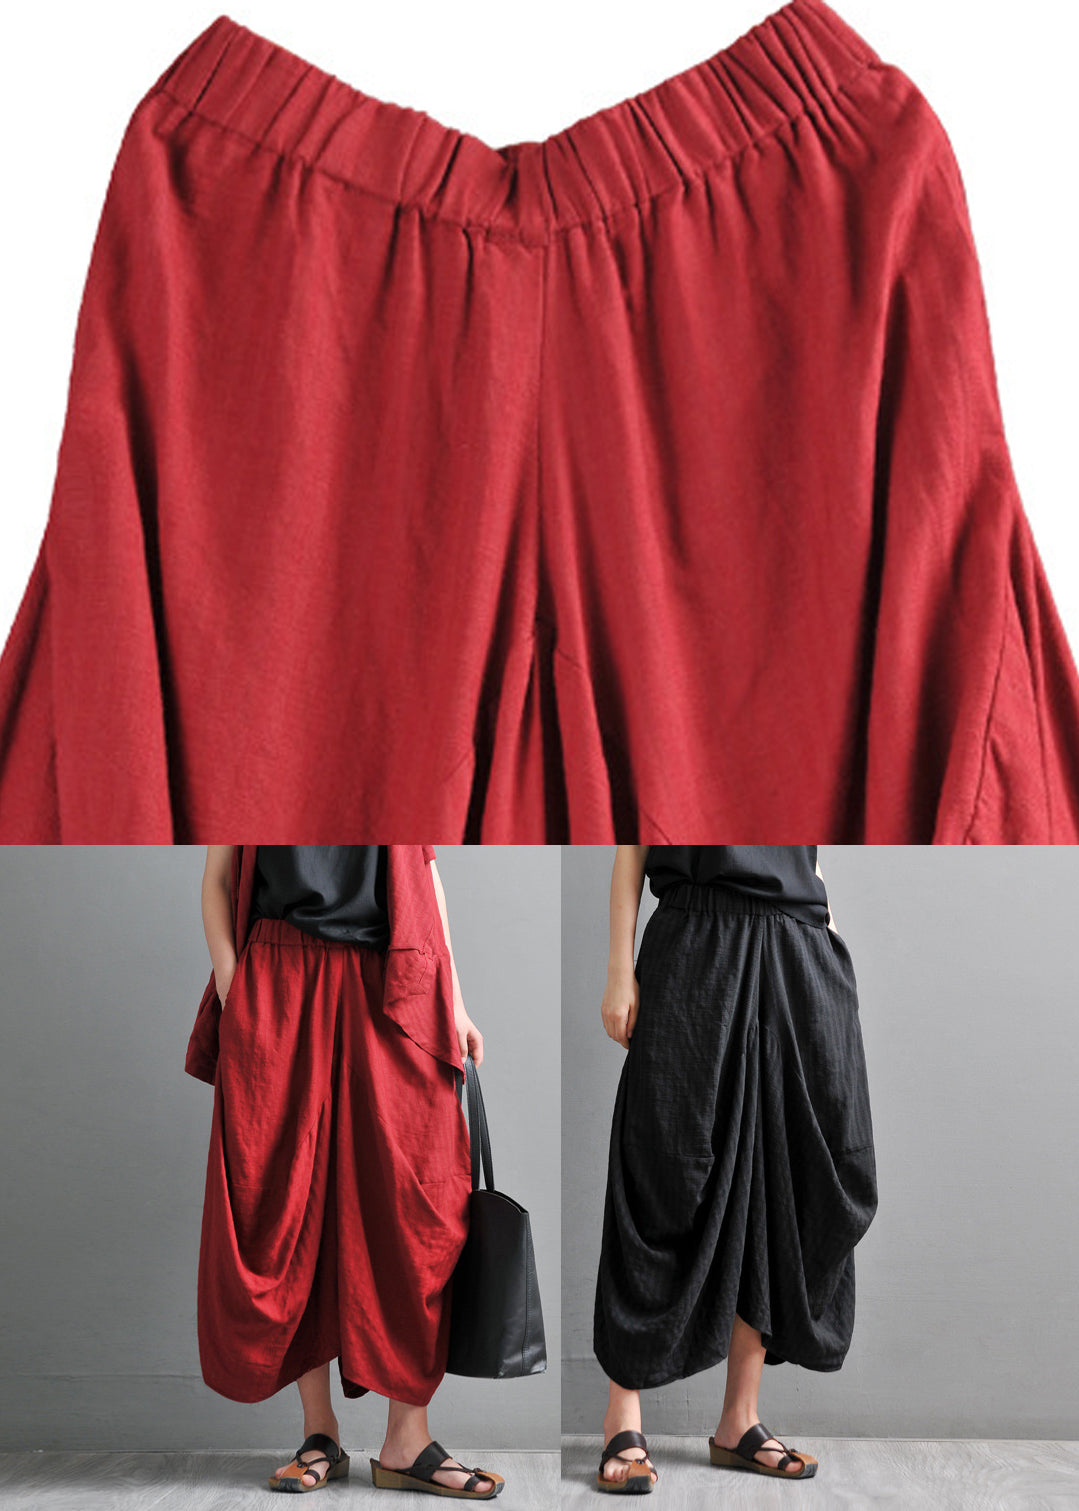 Simple Red Pockets Wide Leg Pants Skirt Summer